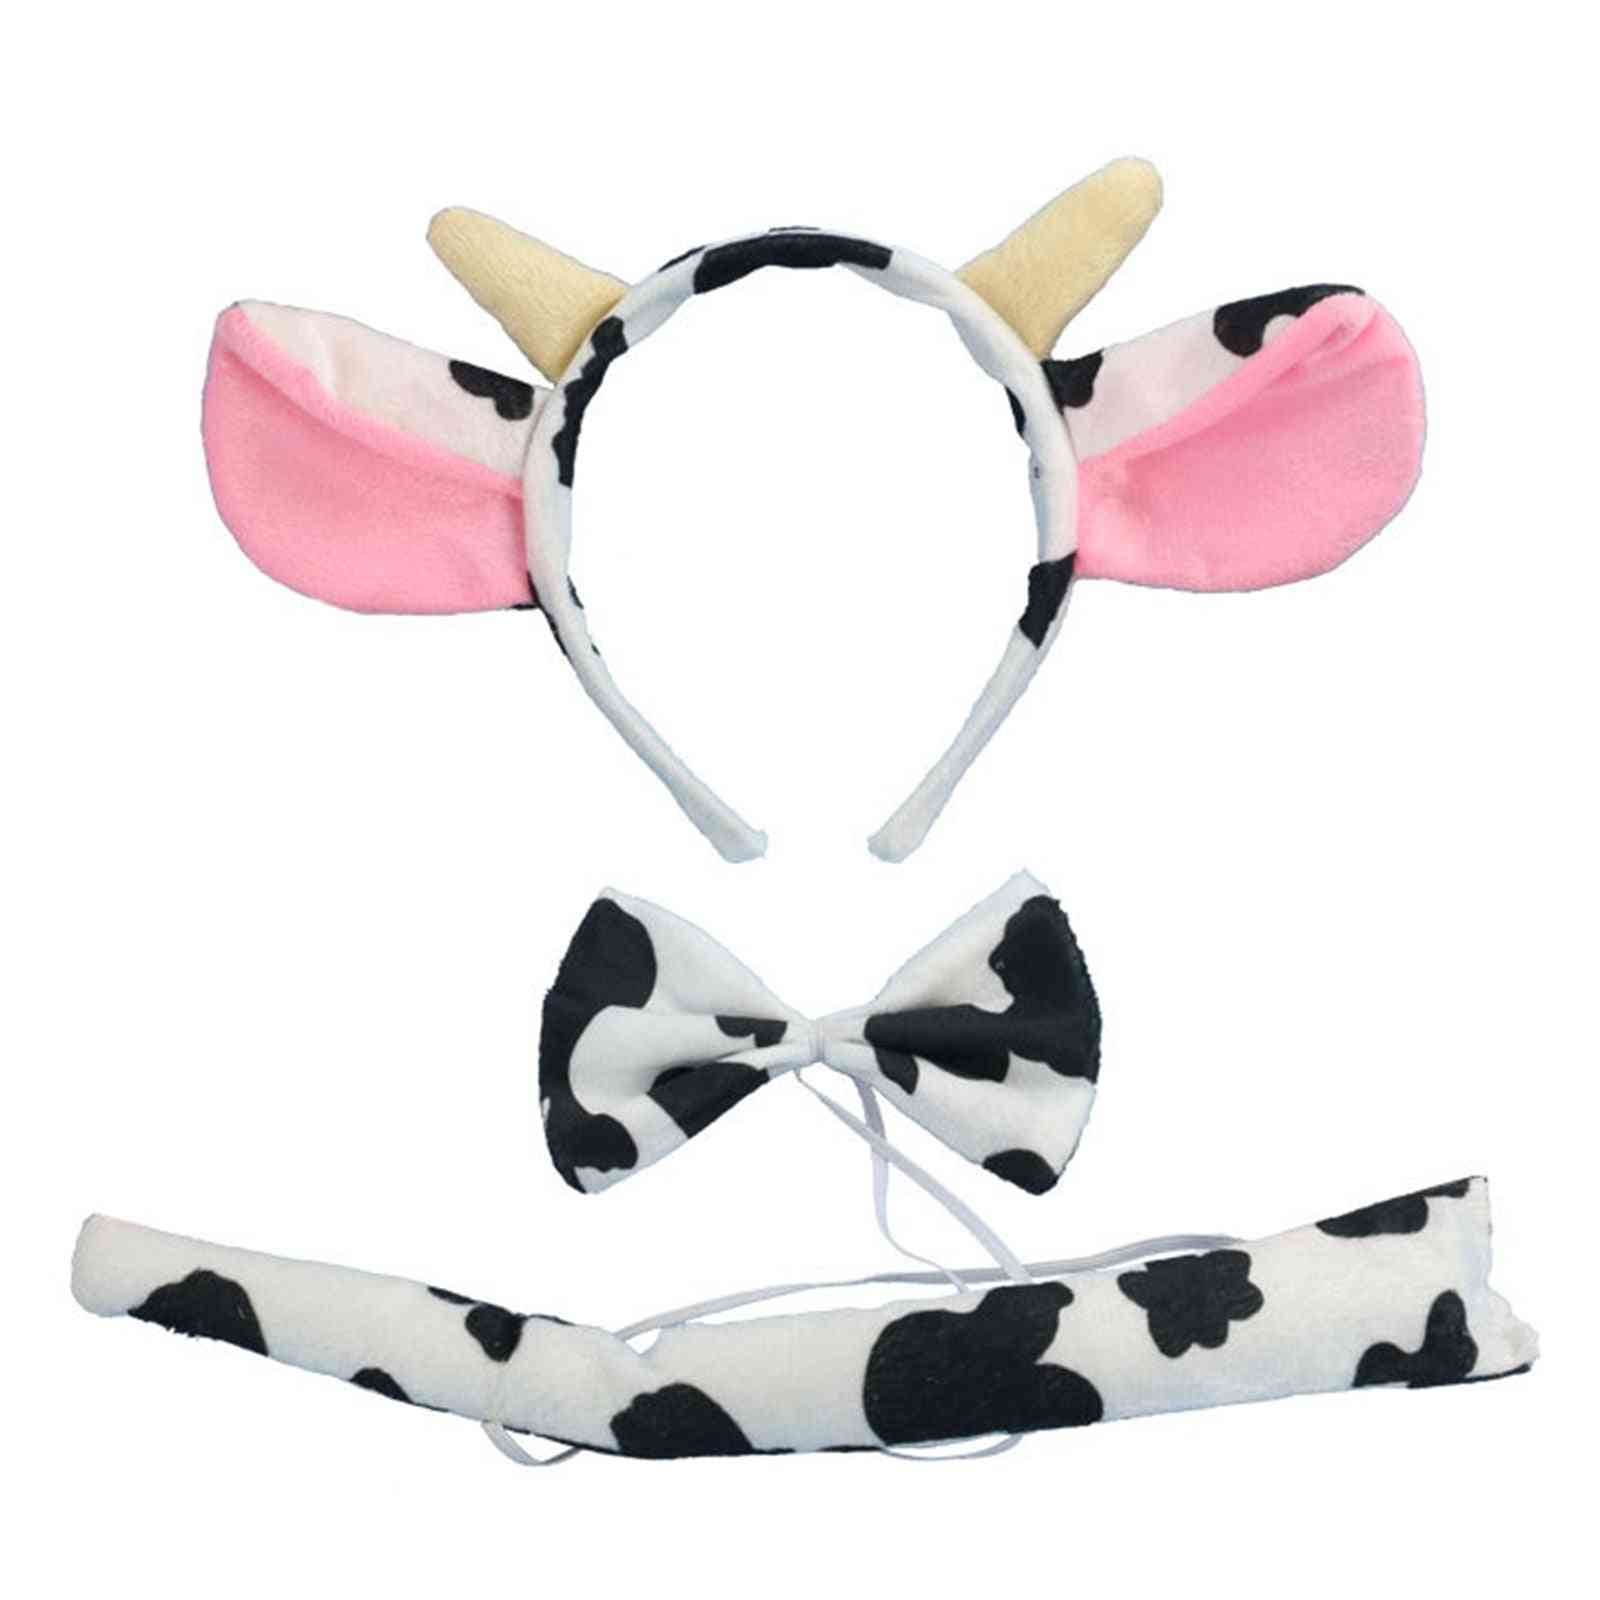 Kids Party Dress Up Costume, Cattle Cow Headband, Ears Bowtie